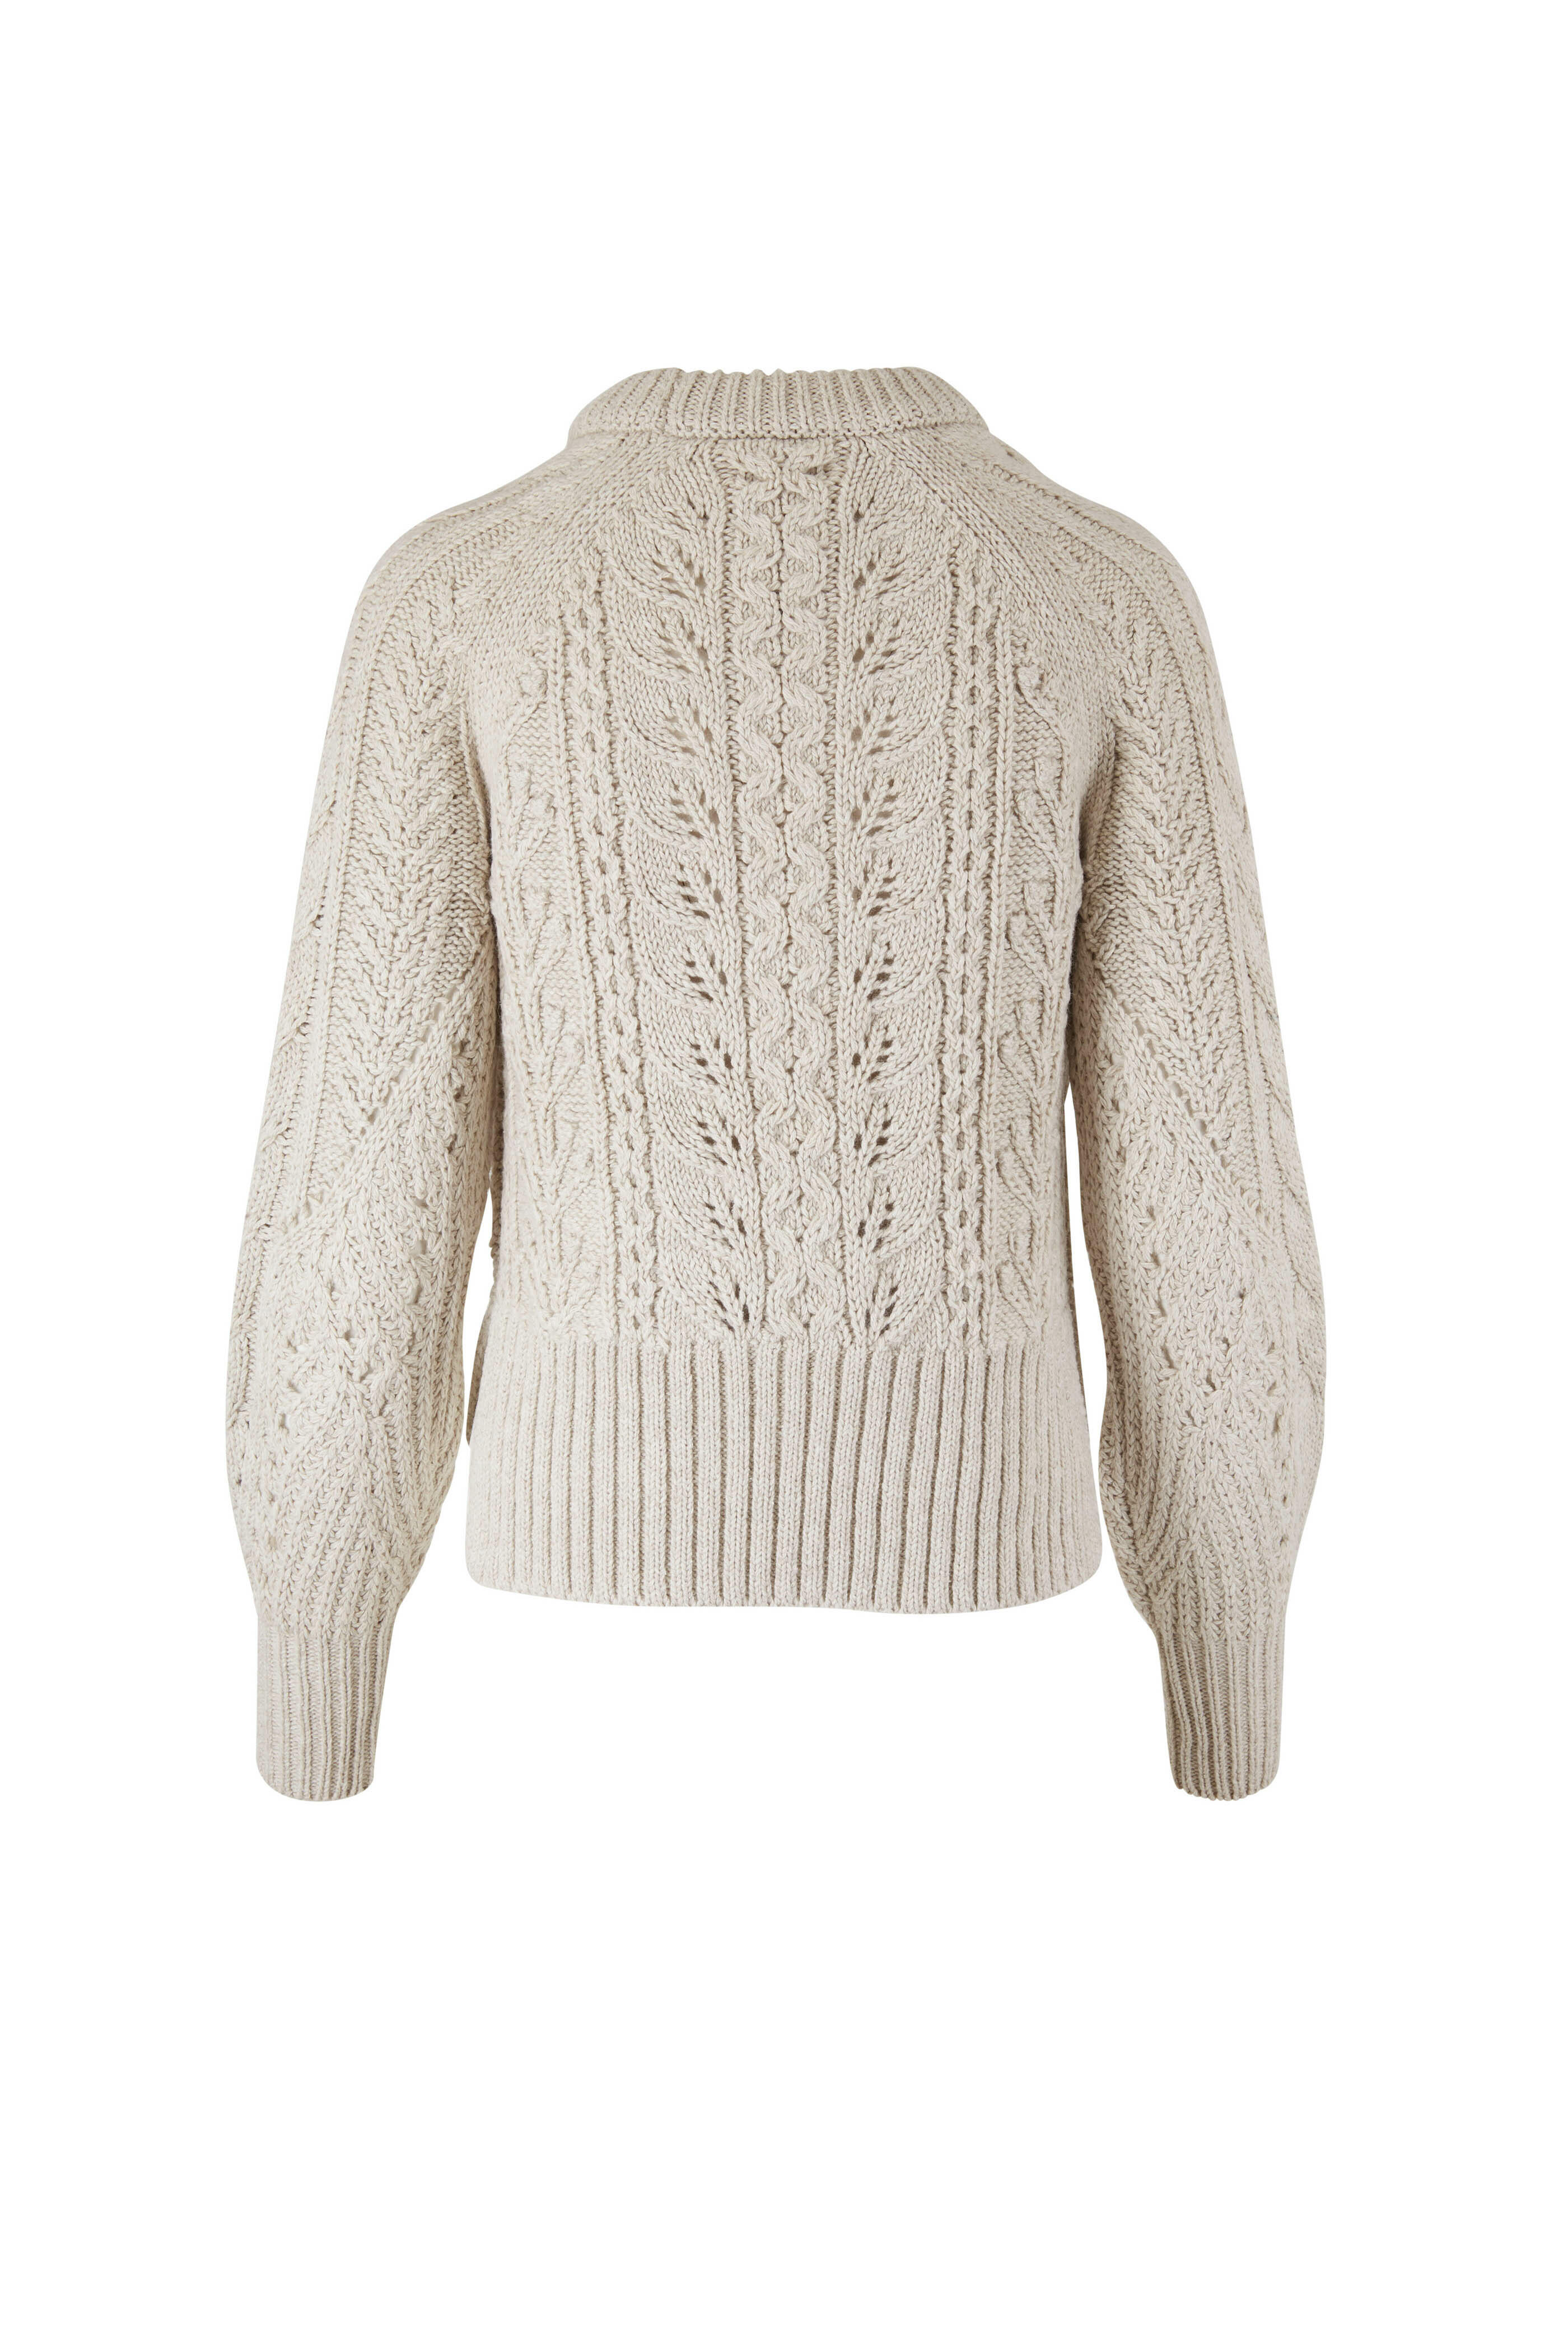 Veronica Beard - Asita Ivory Cable-Knit Sweater